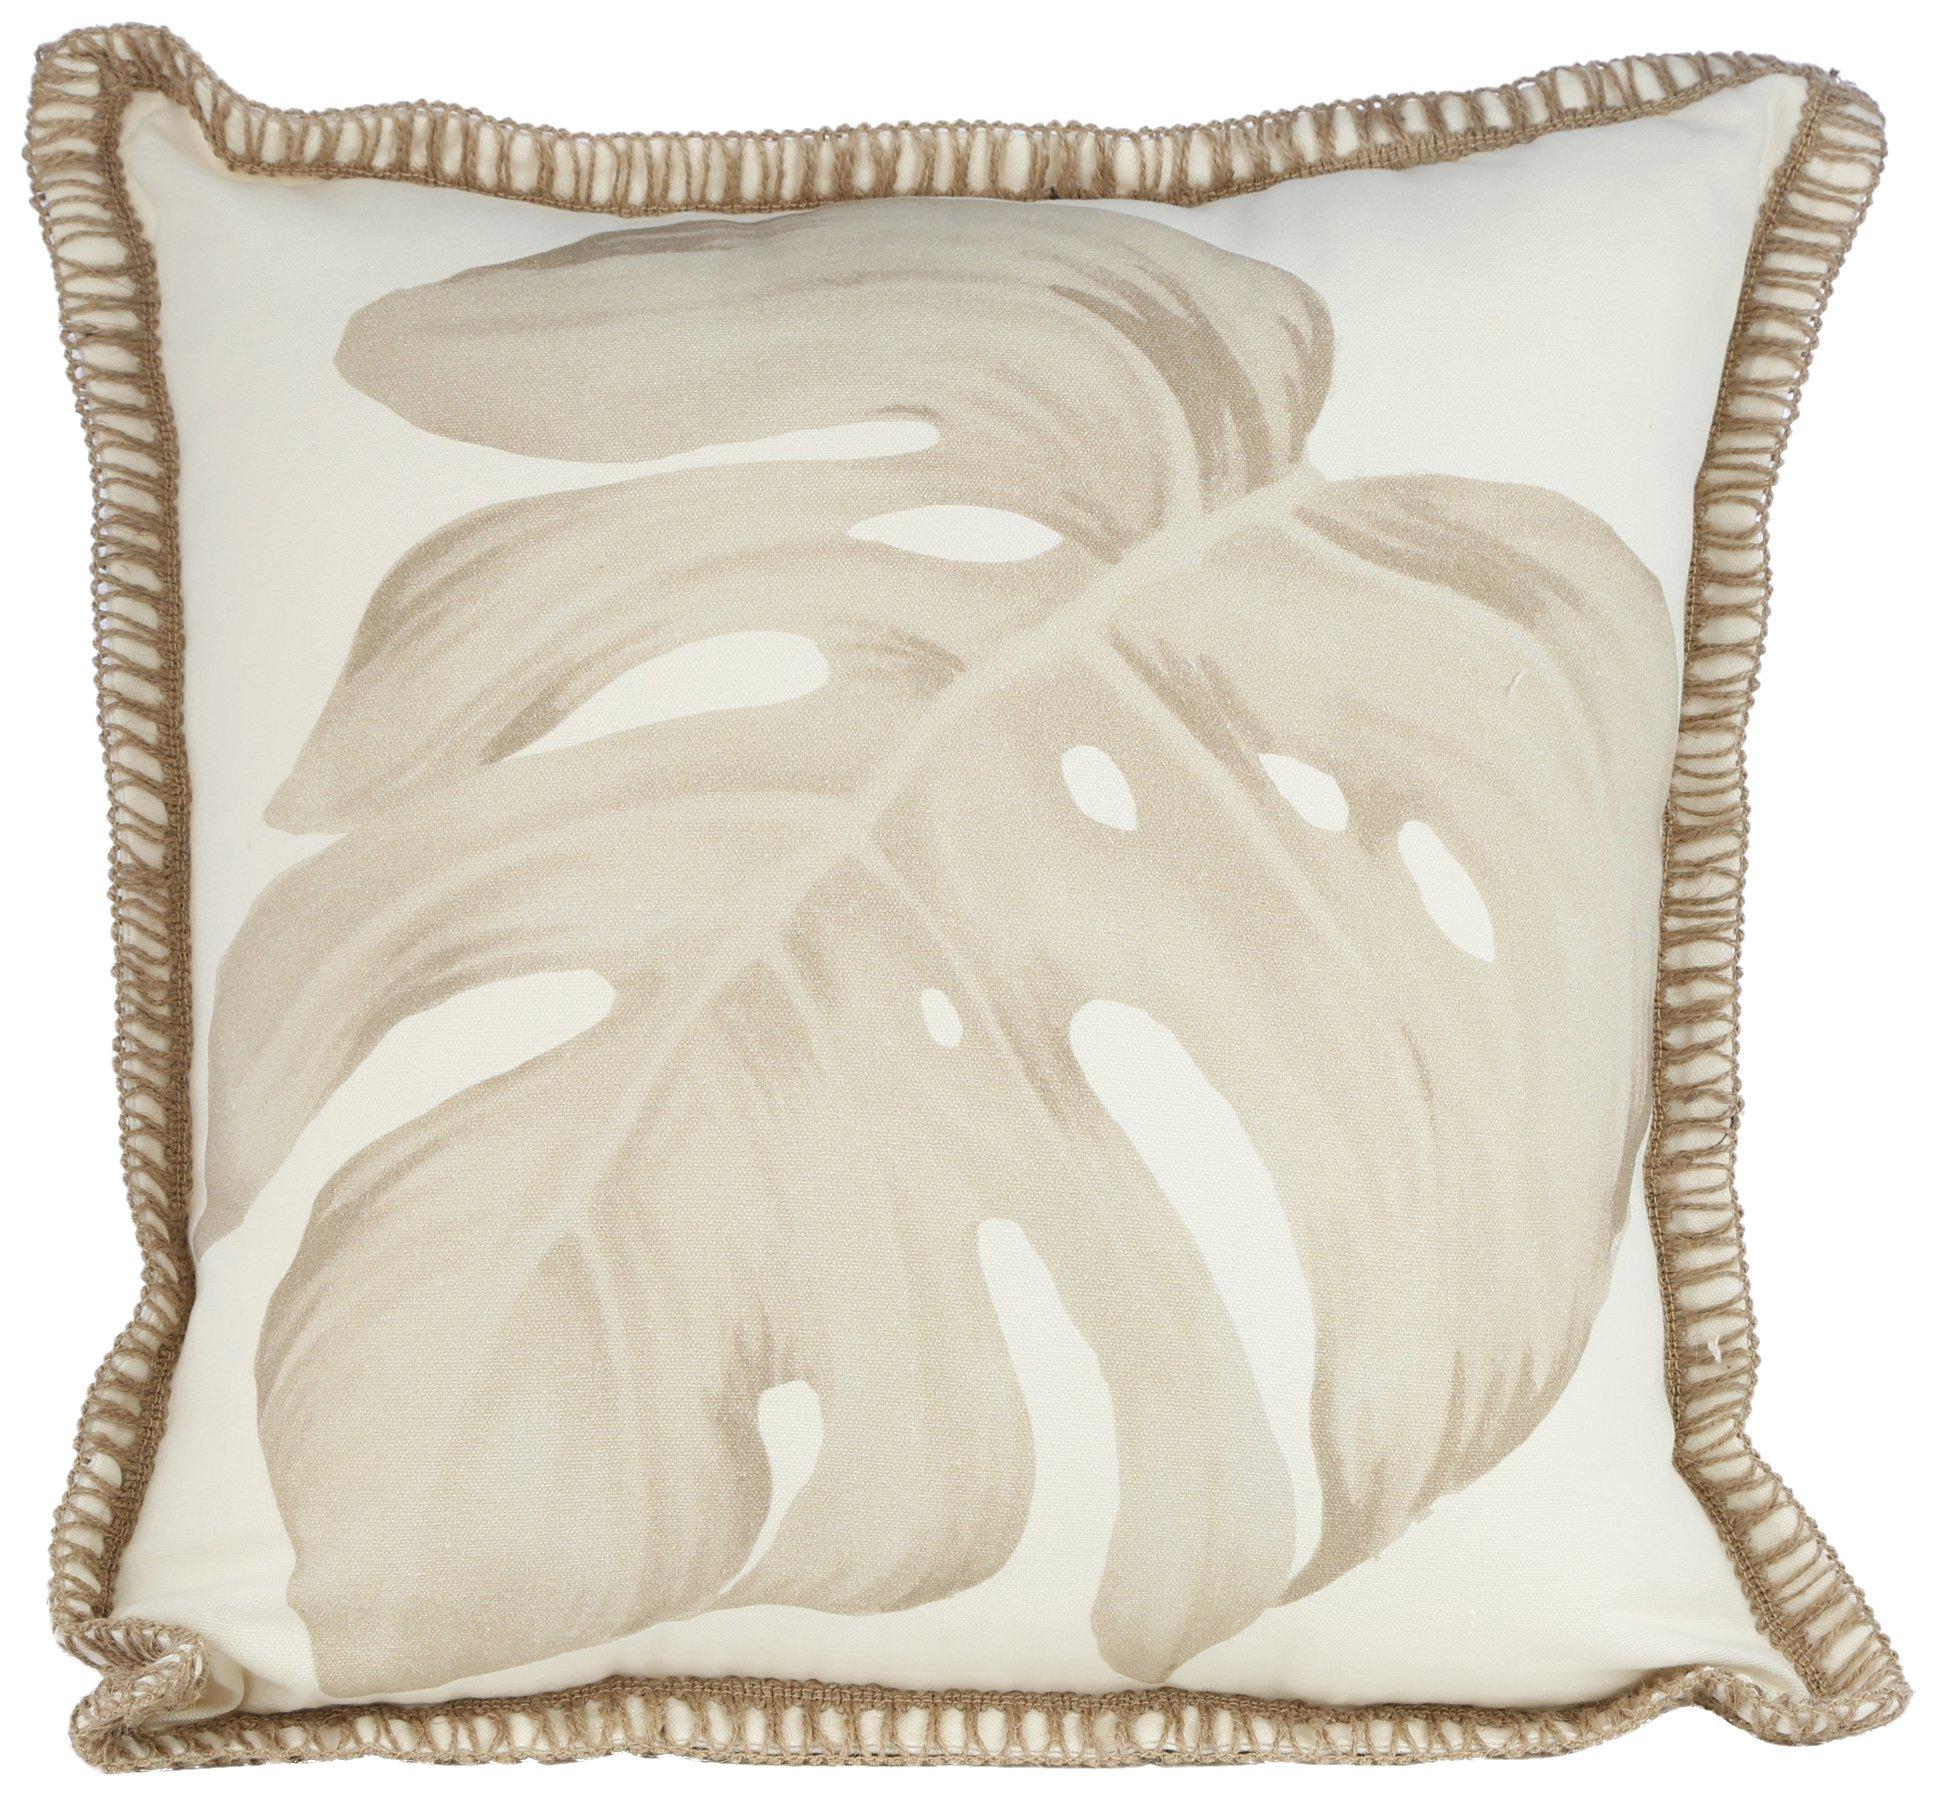 19x19 Printed Palm Decorative Pillow